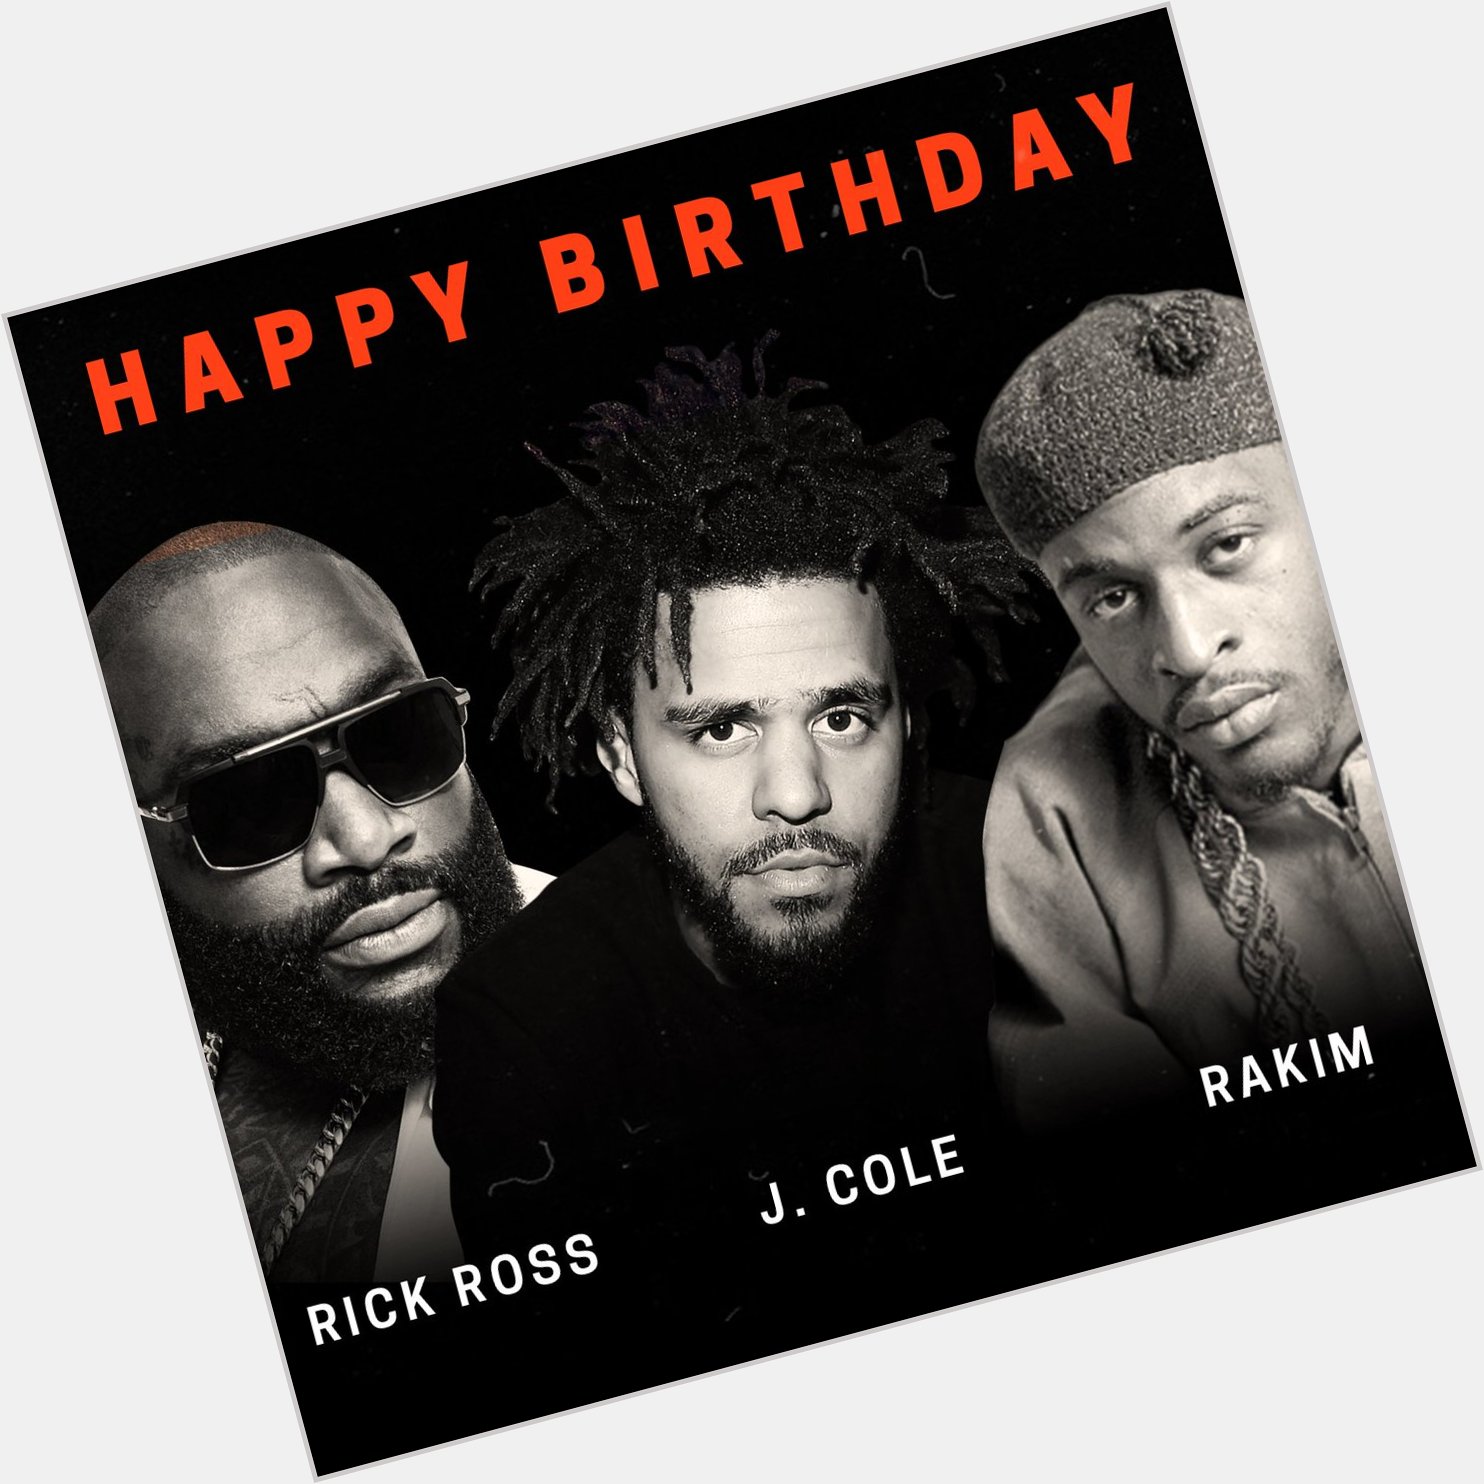 Happy Birthday to Rick Ross, J. Cole & Rakim 